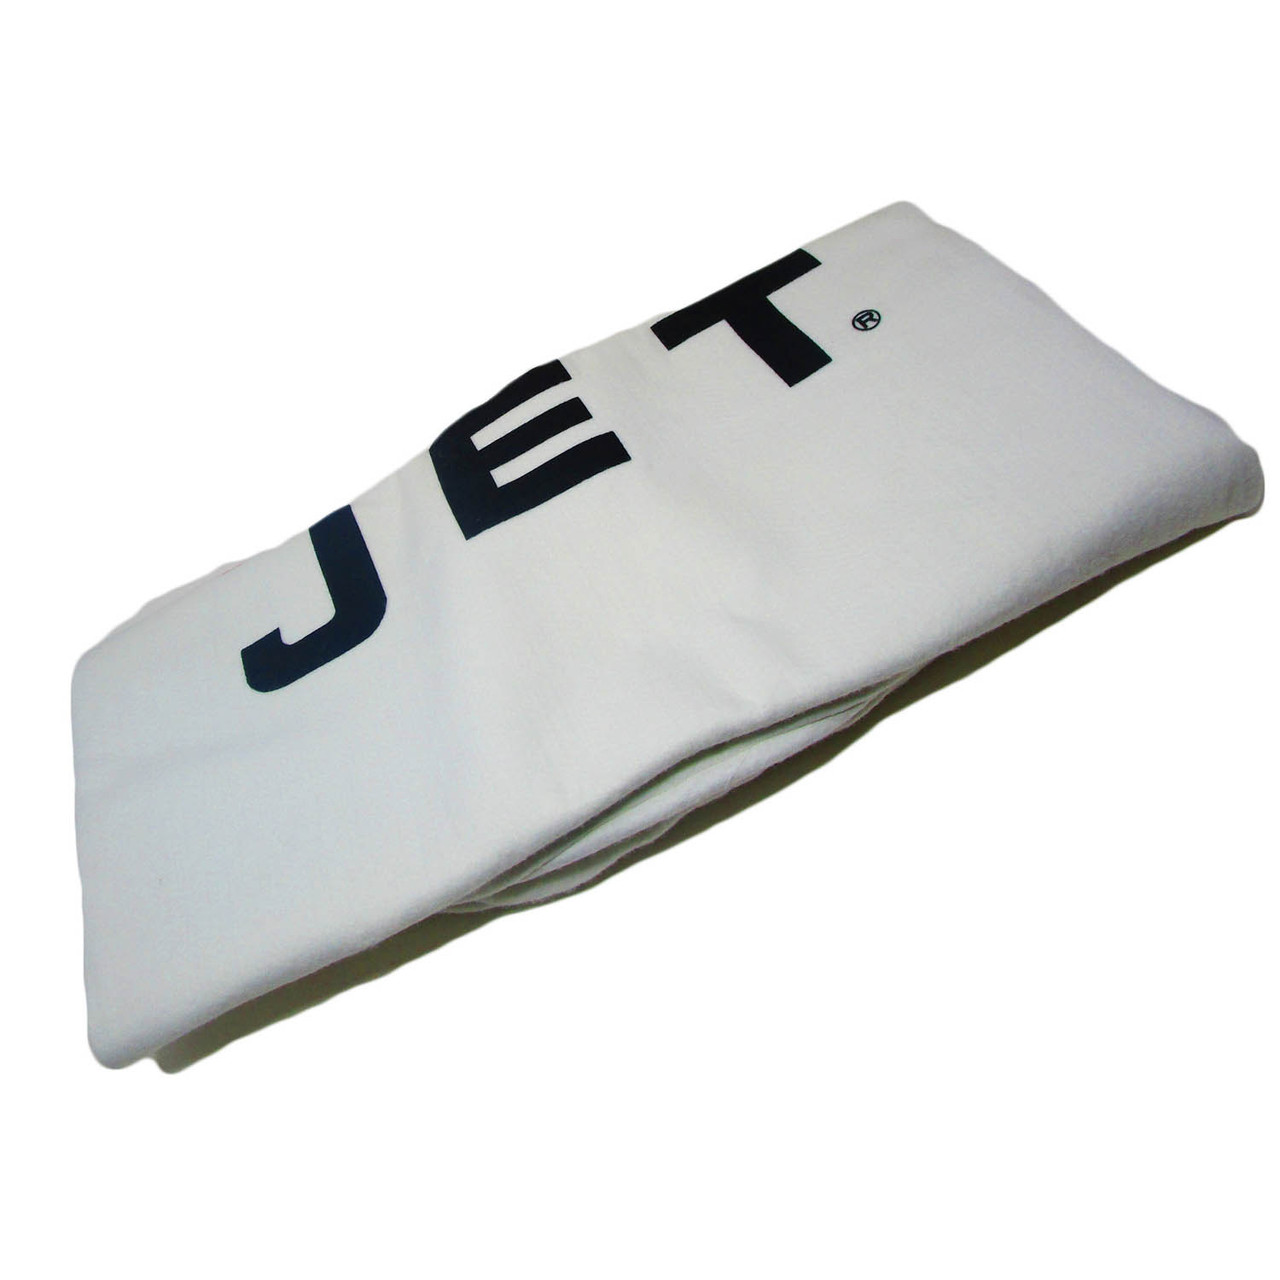 JET, JT9-708701, Filter Bag, 5-Micron, for DC-650